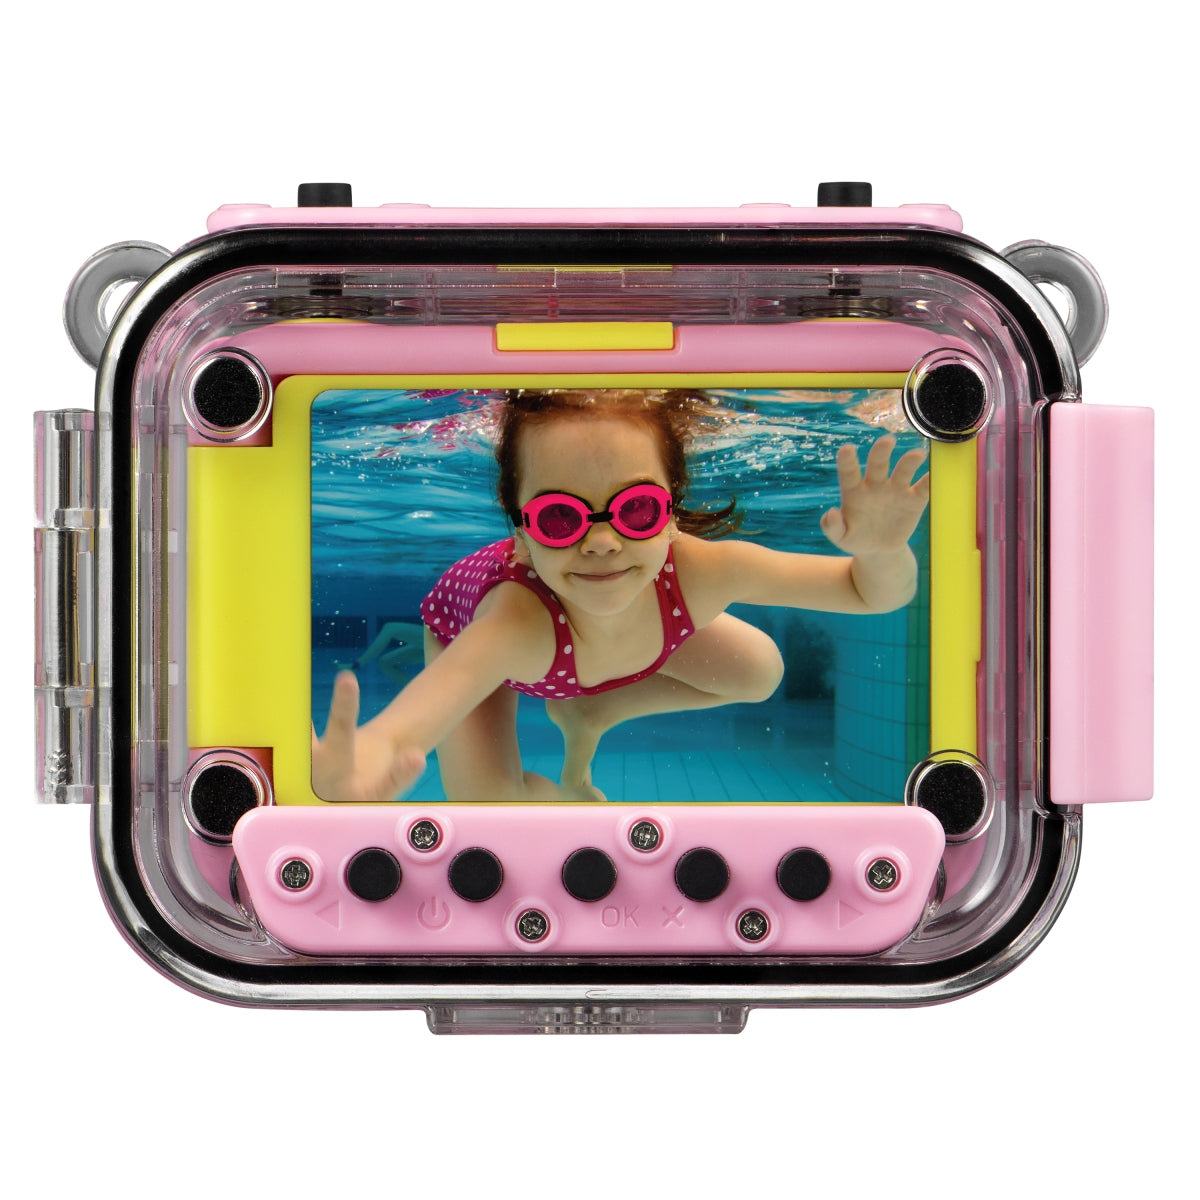 Volkano Kids Funtime 2.0 series Waterproof Camera with 180° Rotatable Screen - Pink